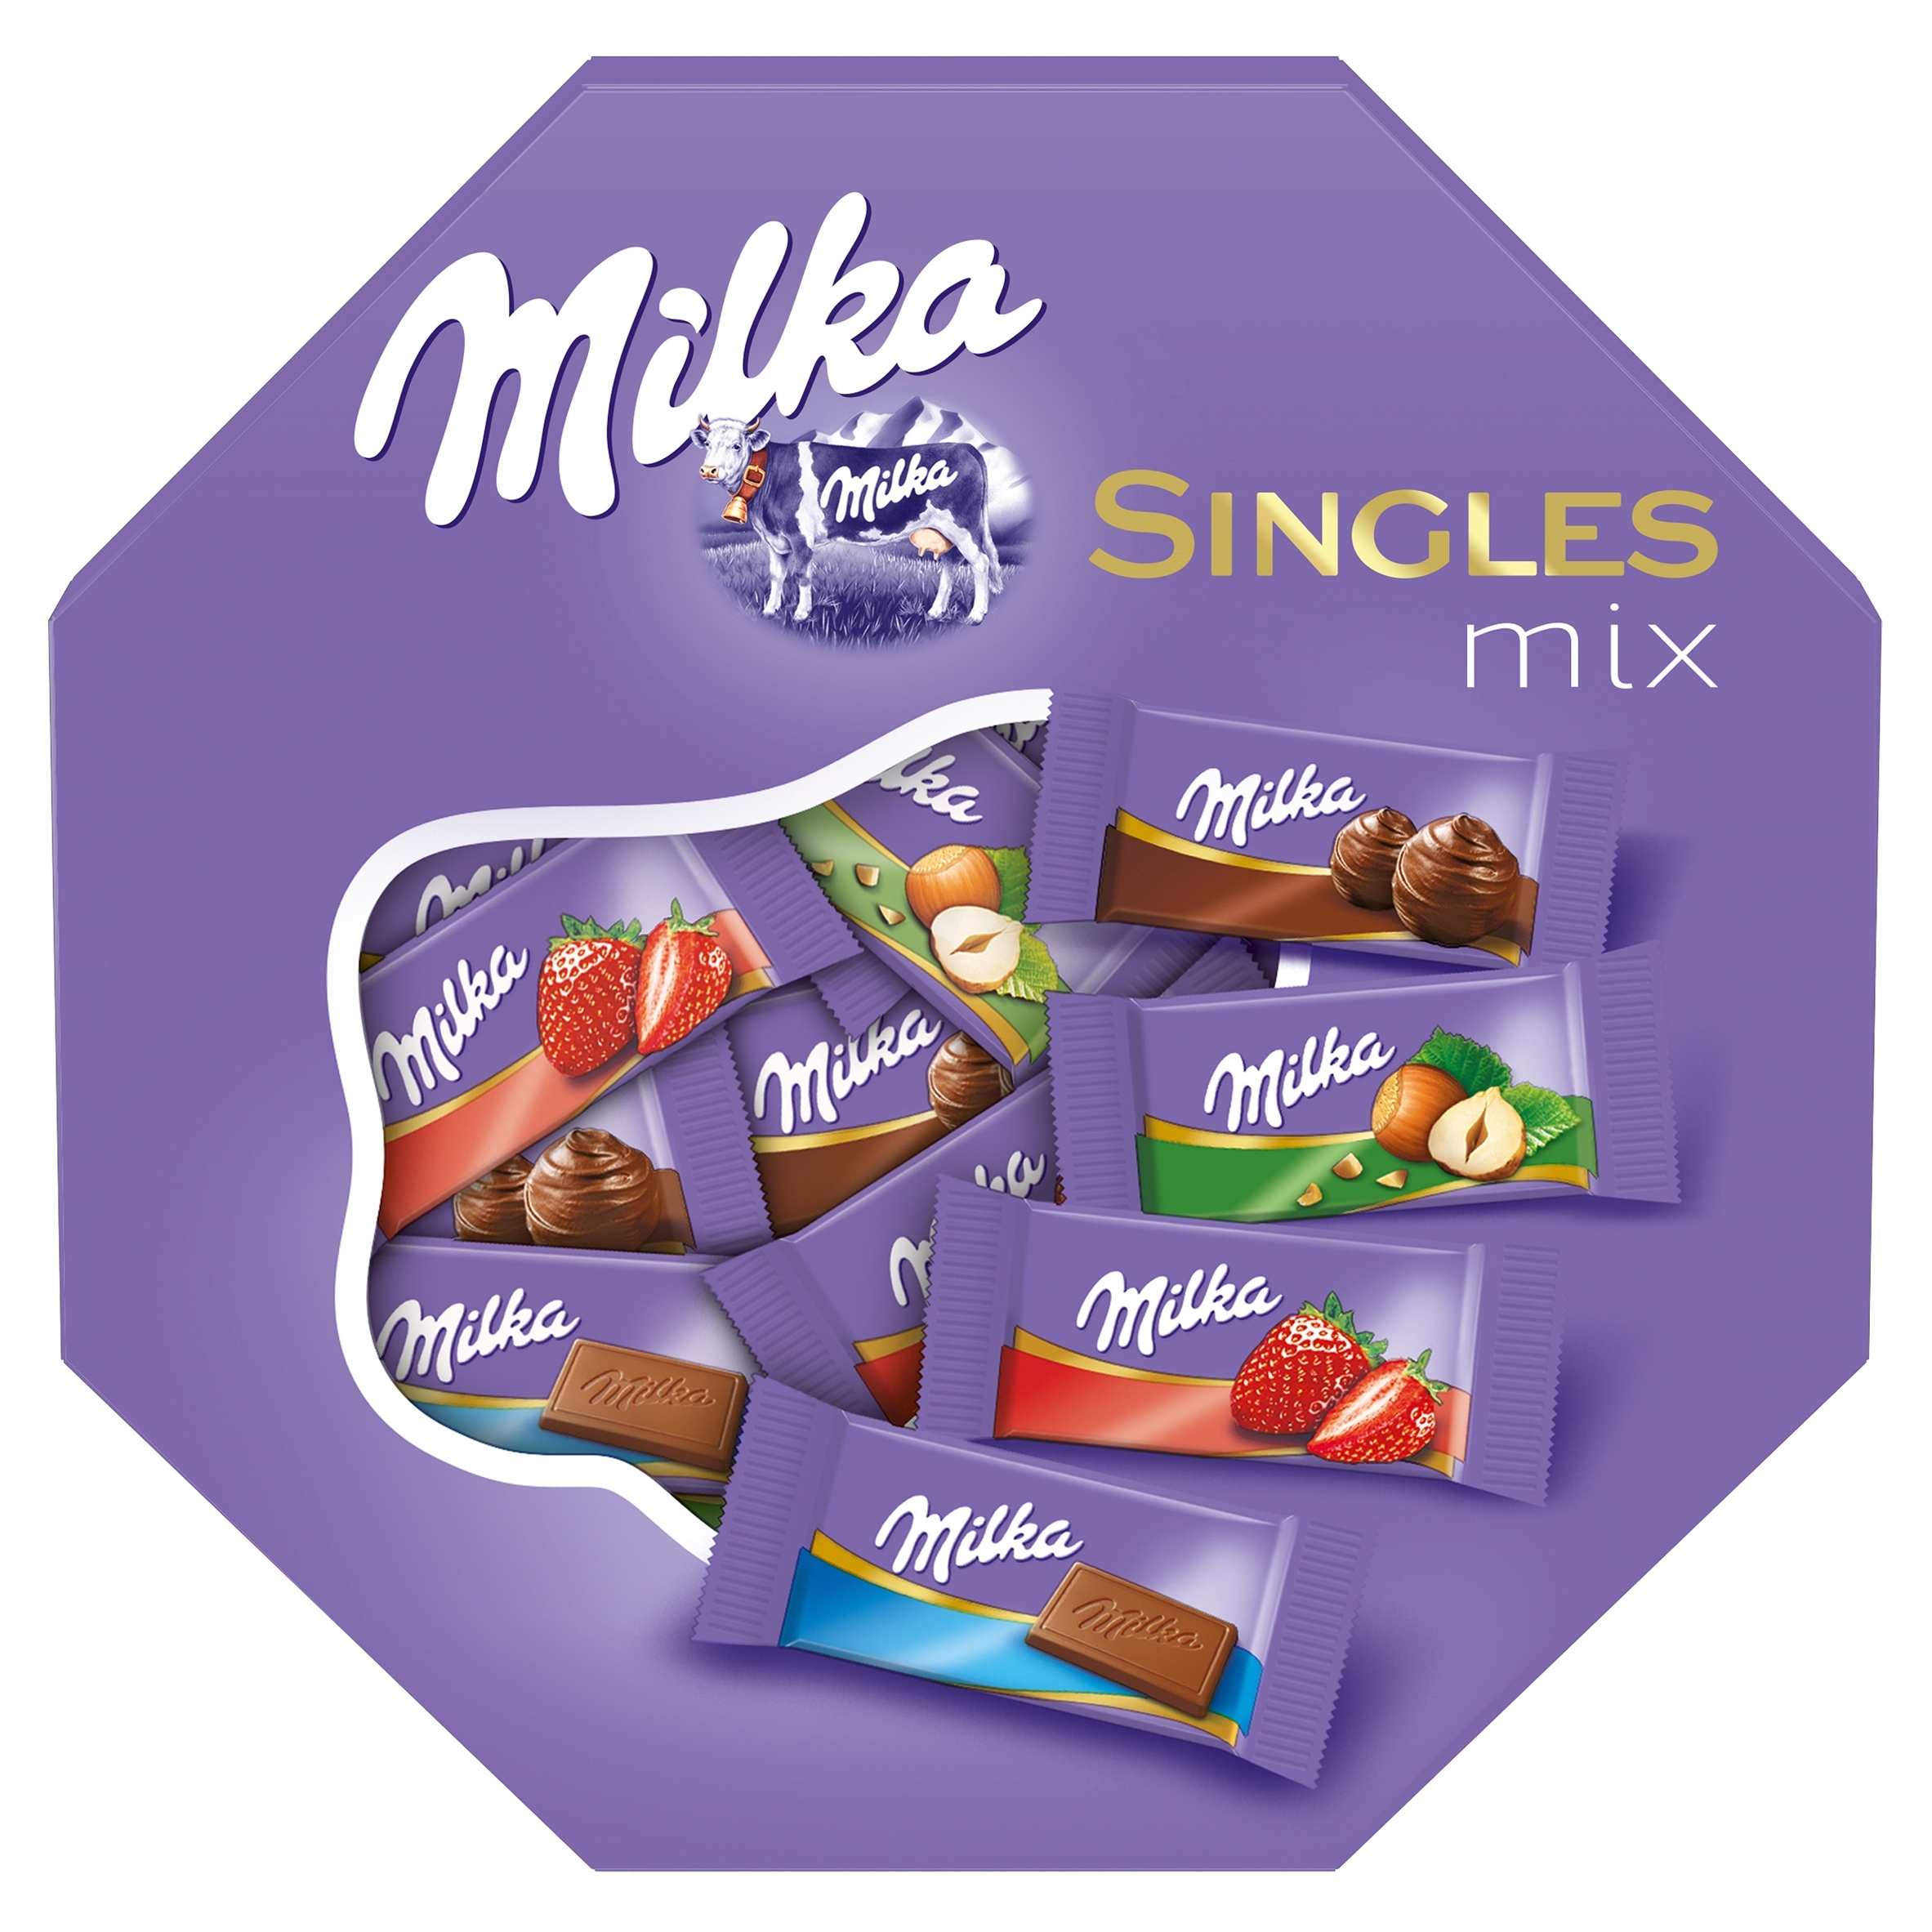 Коробка шоколадных конфет Milka Singles Mix / Милка сингл микс 138гр (Германия). Набор конфет Milka ассорти 167 г. Milka Milka коробка. Milka шоколад набор конфет. Милка лайк